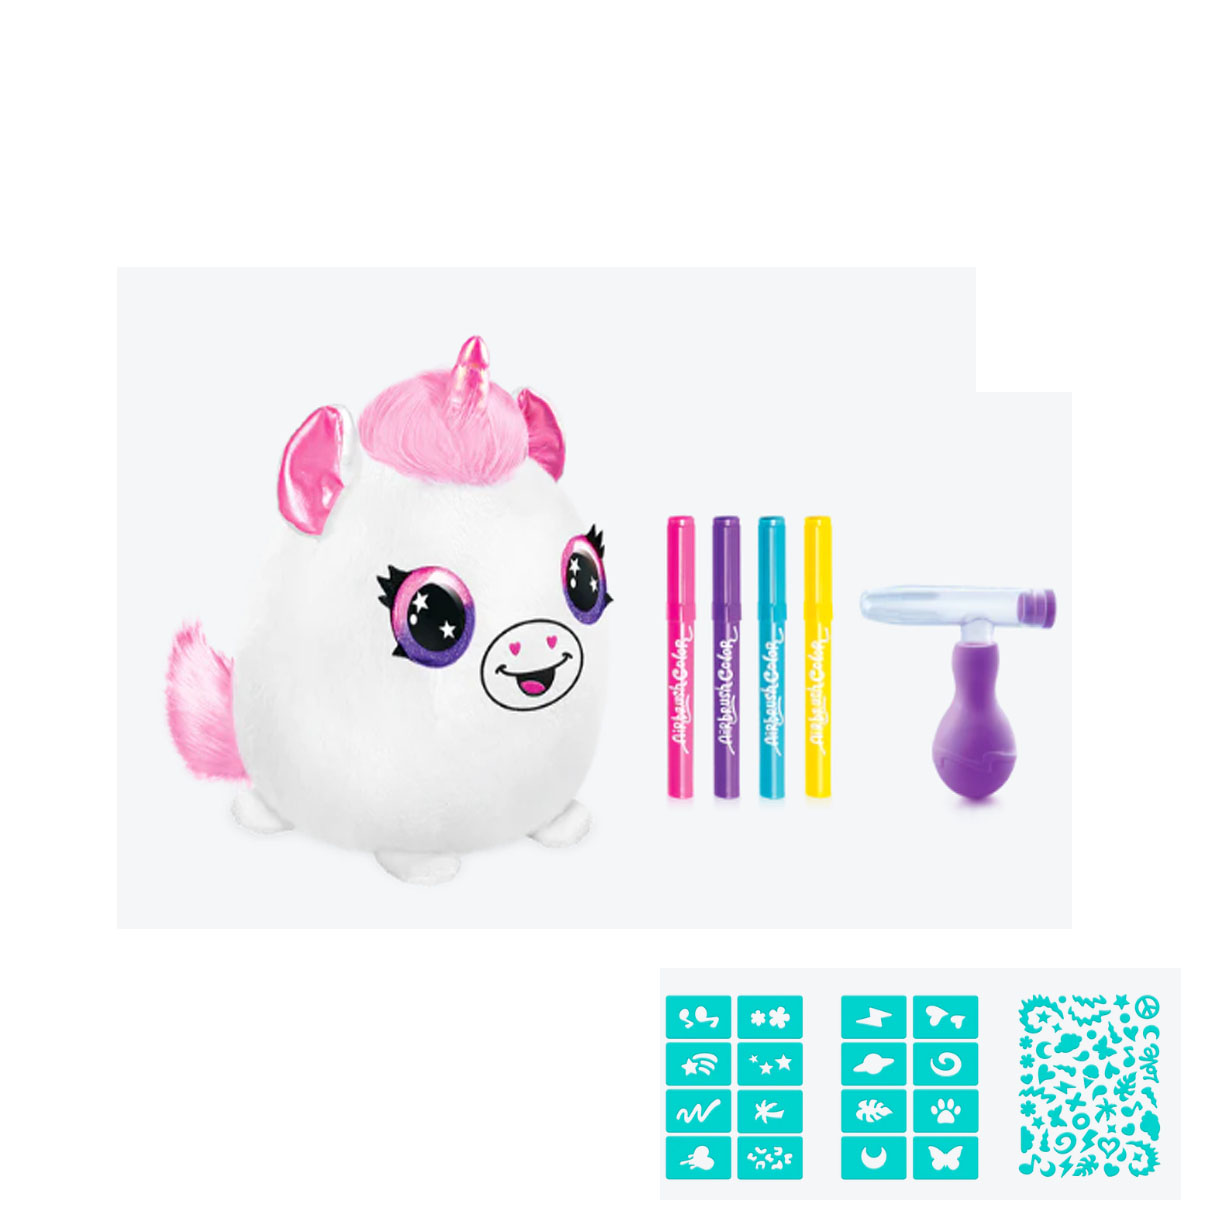 cubo de colorea tu mascota - colour your plush bucket - airbrush plush - style 4 ever - ofg266